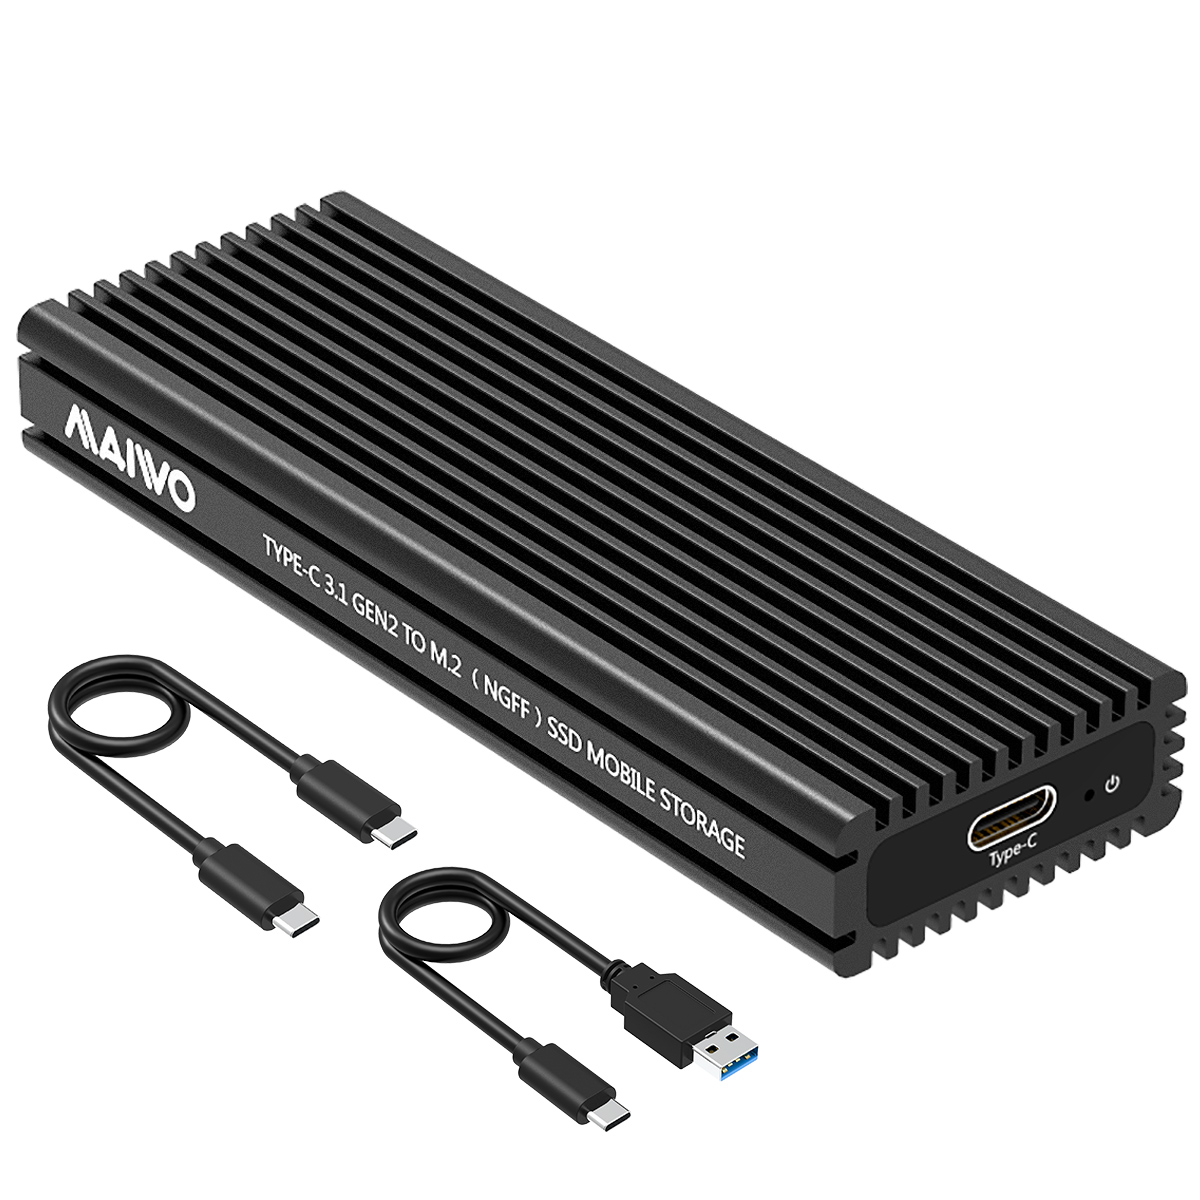 MAIWO K1687S Aluminum M.2 SATA SSD Enclosure Reader USB 3.1 Gen 2(6Gbps) Type-C External SSD Adapter